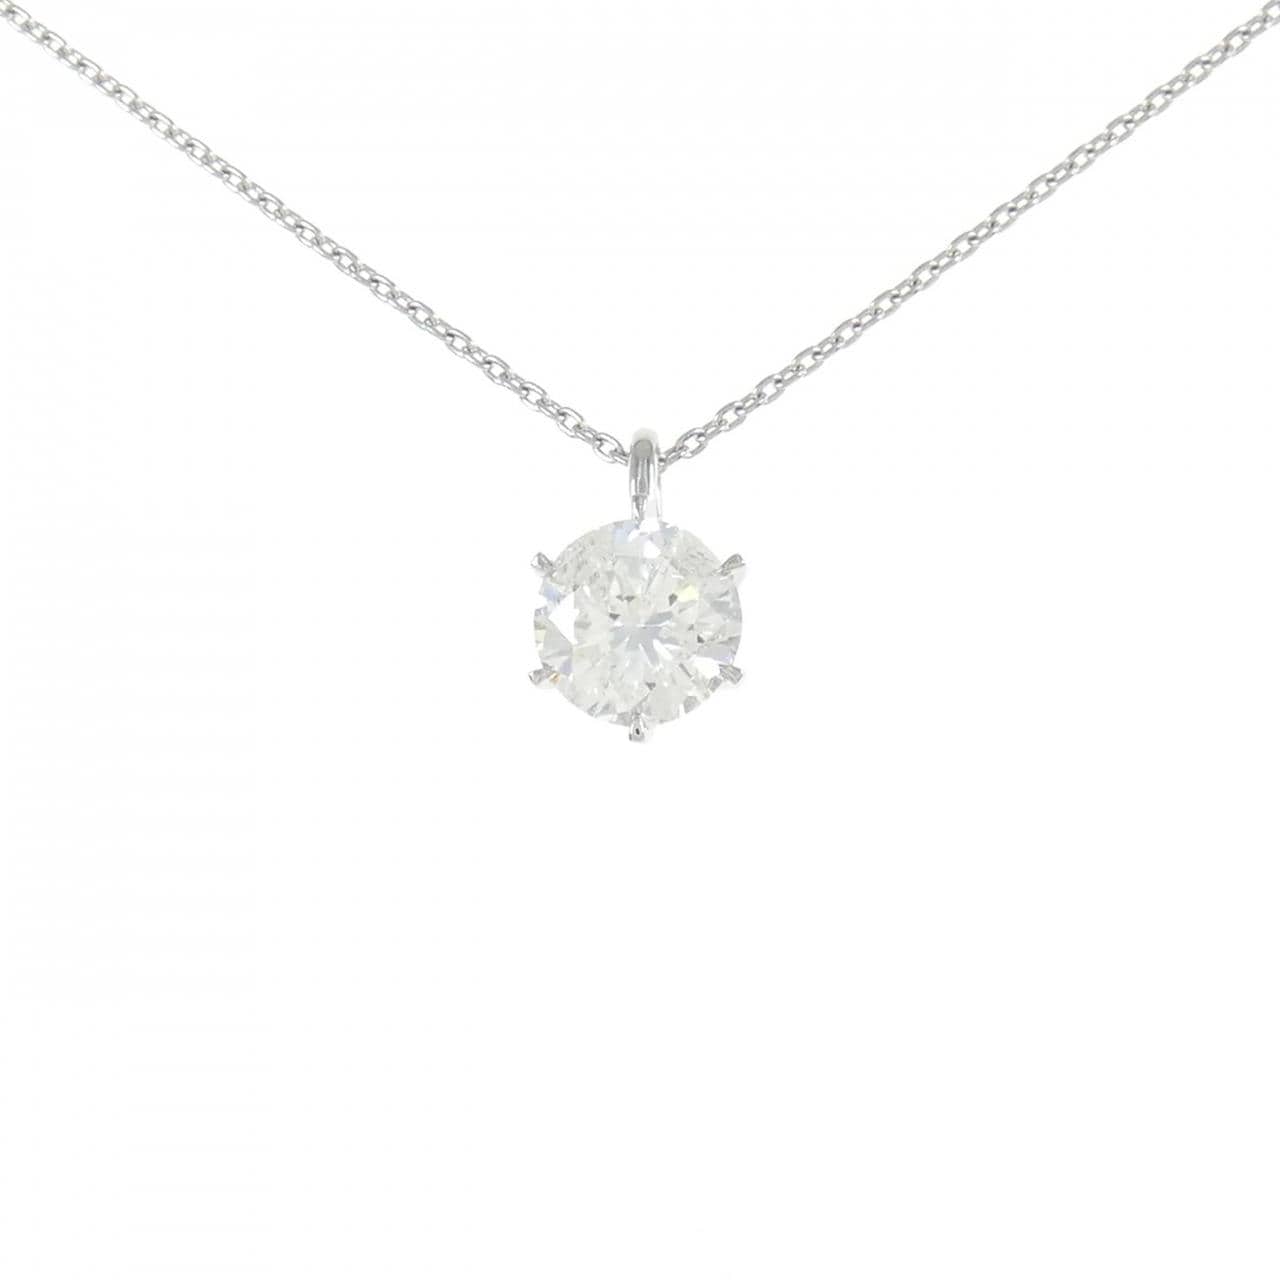 [Remake] PT Diamond Necklace 2.074CT H I1 Good